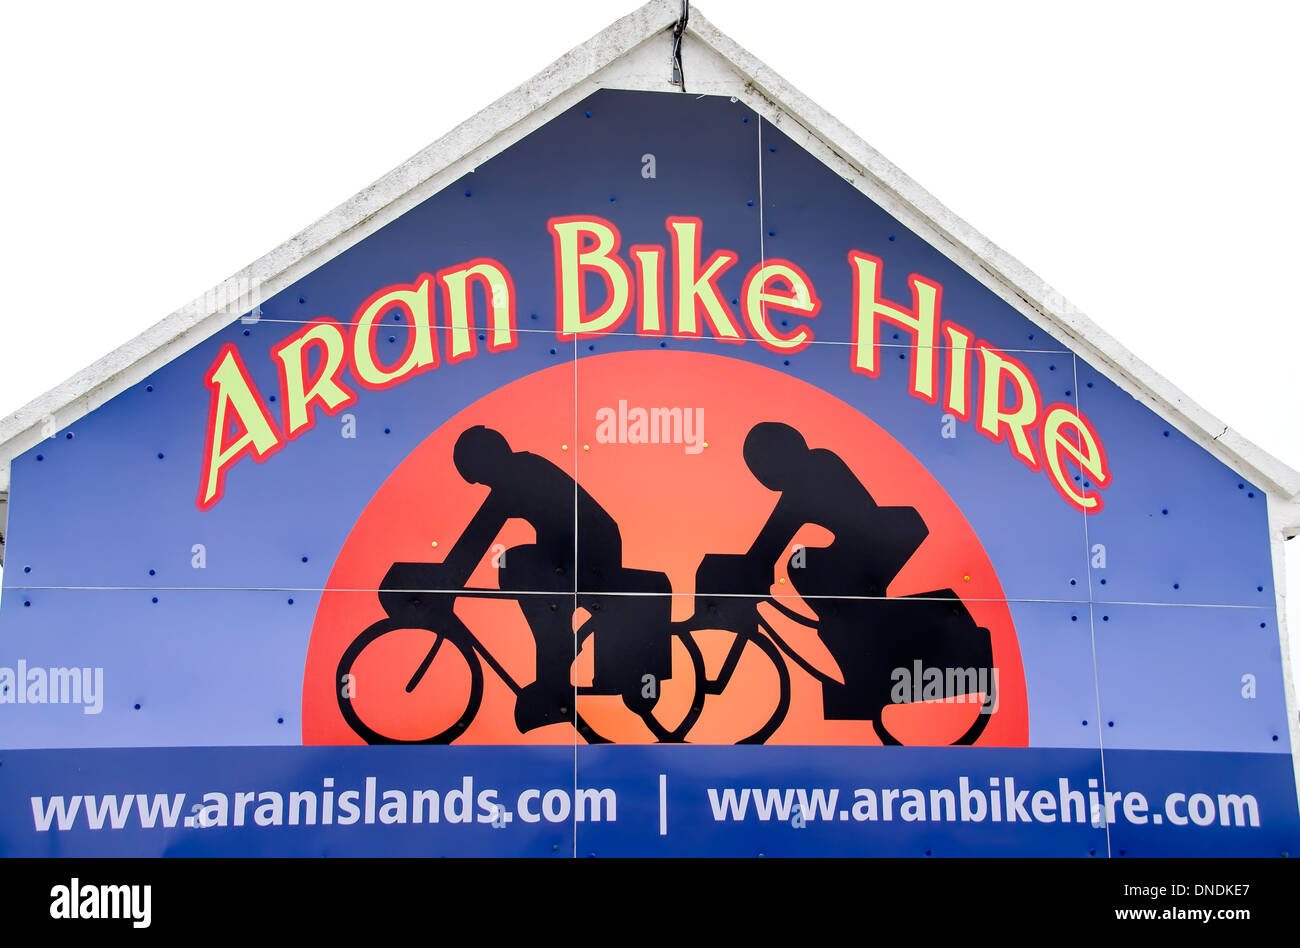 Aran Bike Hire sign at Kilronan village, Inishmore, Aran Islands, Ireland. Stock Photo